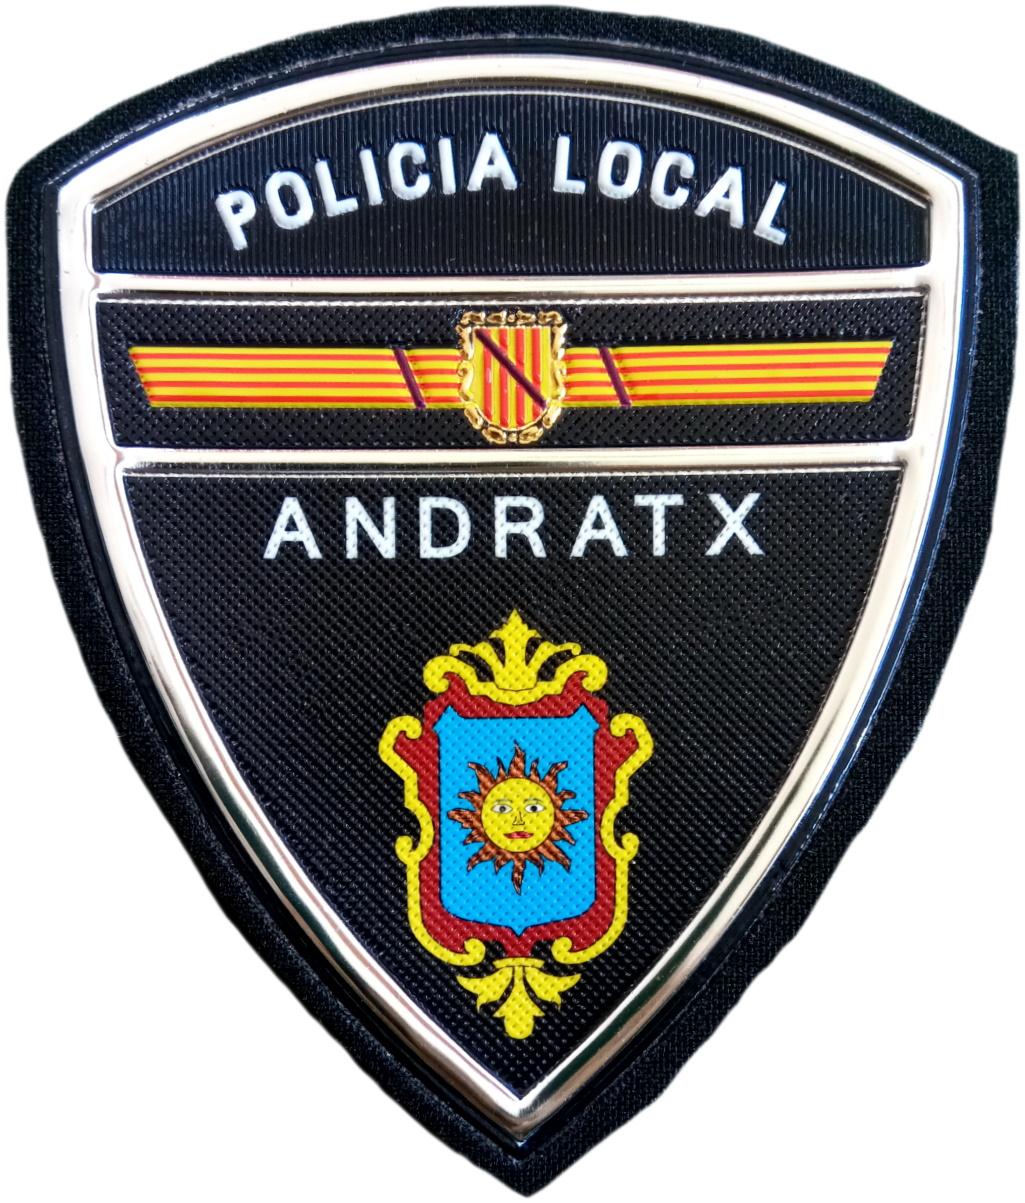 Policía Local Andratx Baleares parche insignia emblema distintivo